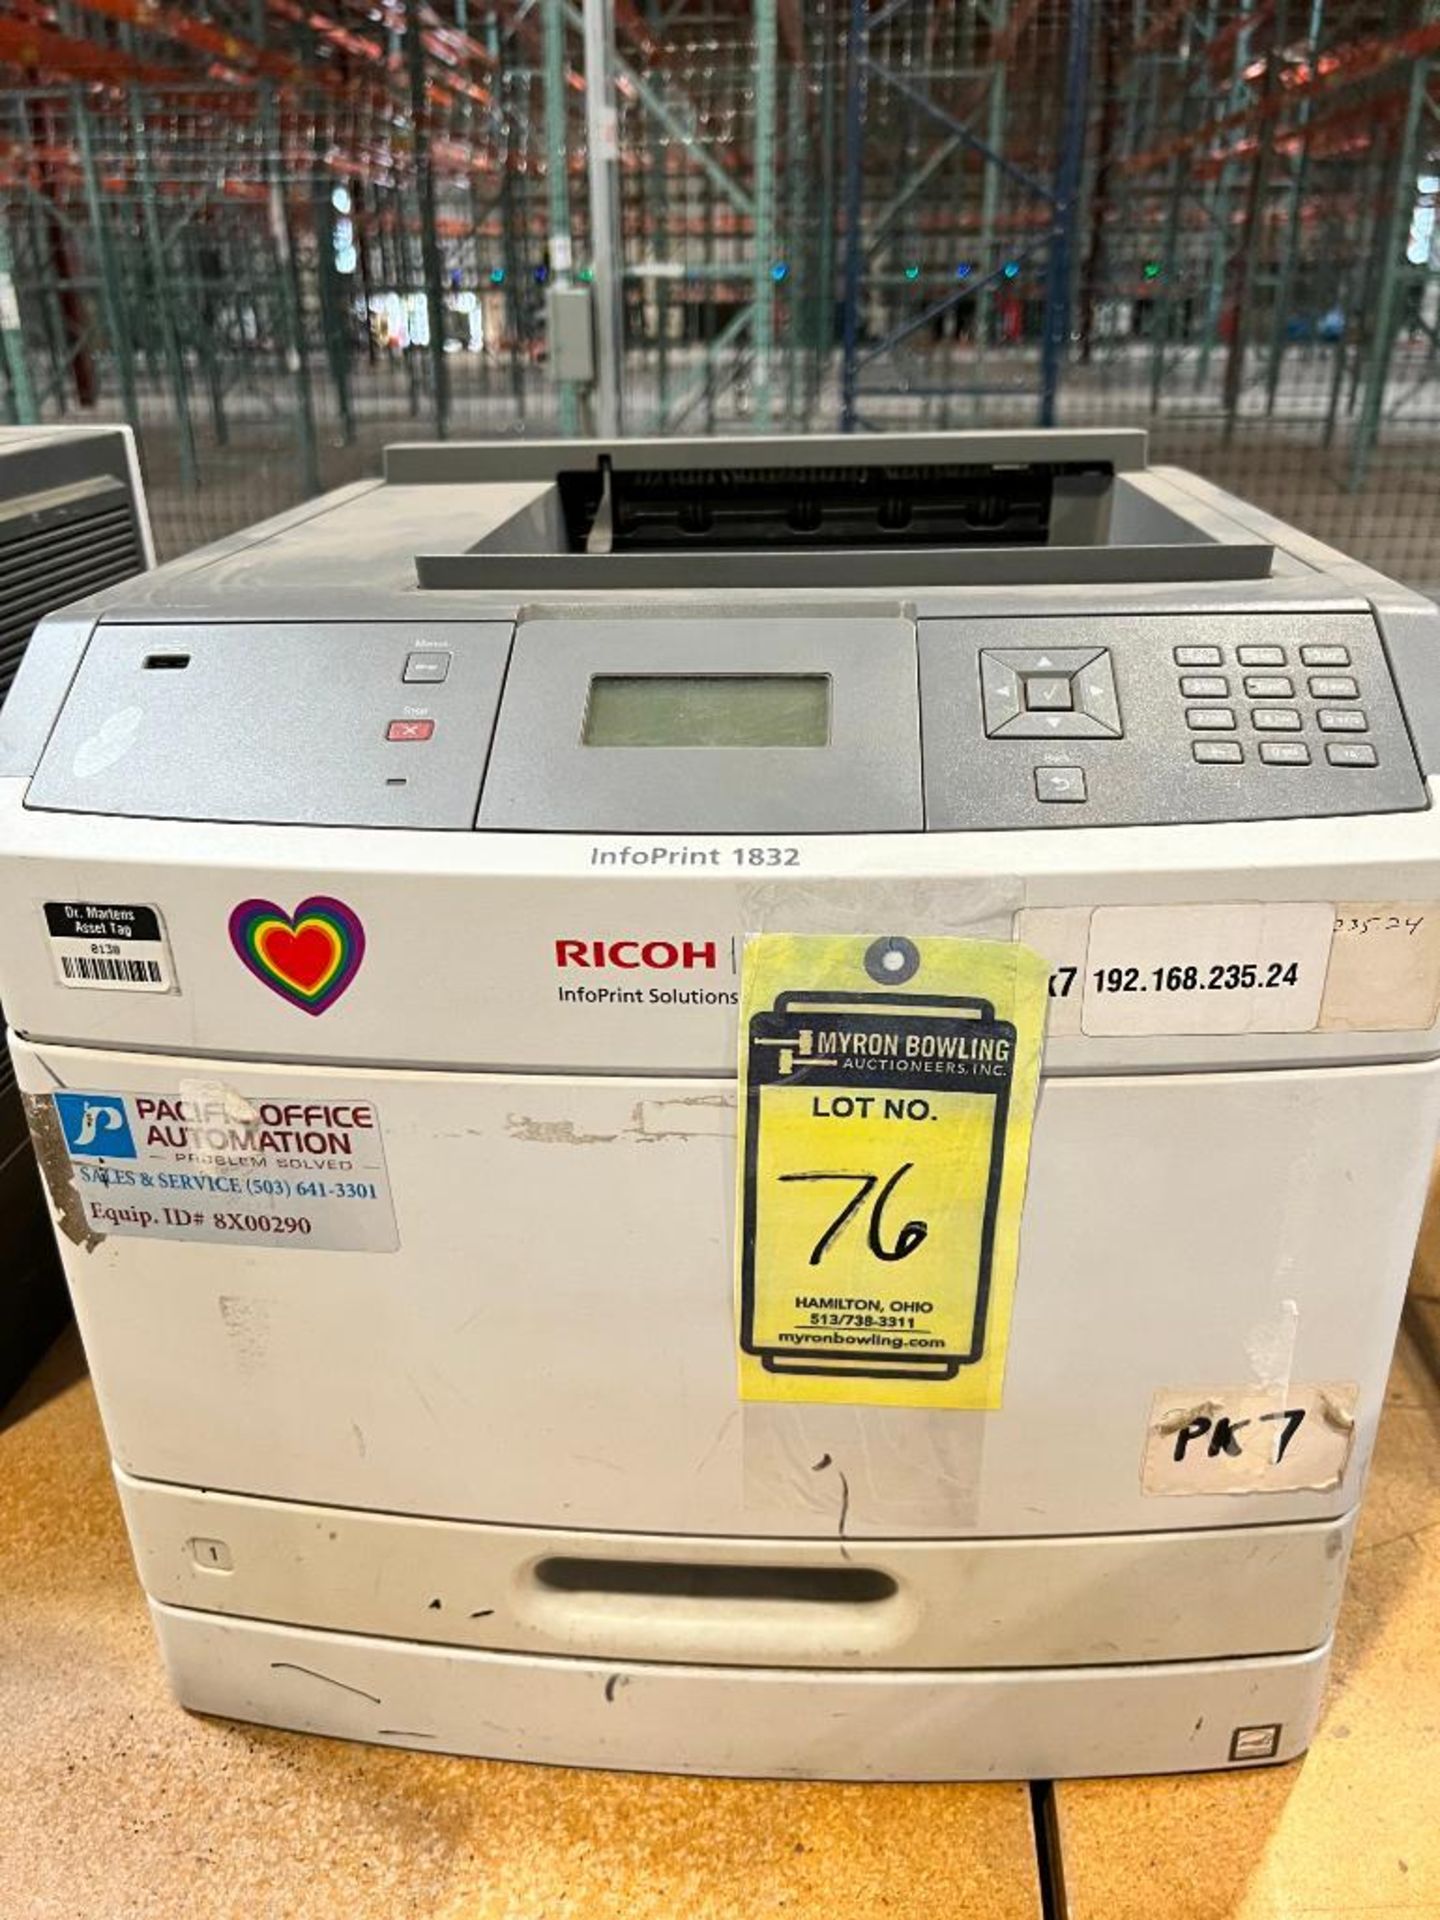 (5) Printers; (1) HP Printer, (1) Ricoh Infoprint Solution Model 1832, (1) Hewlett-Packard Officejet